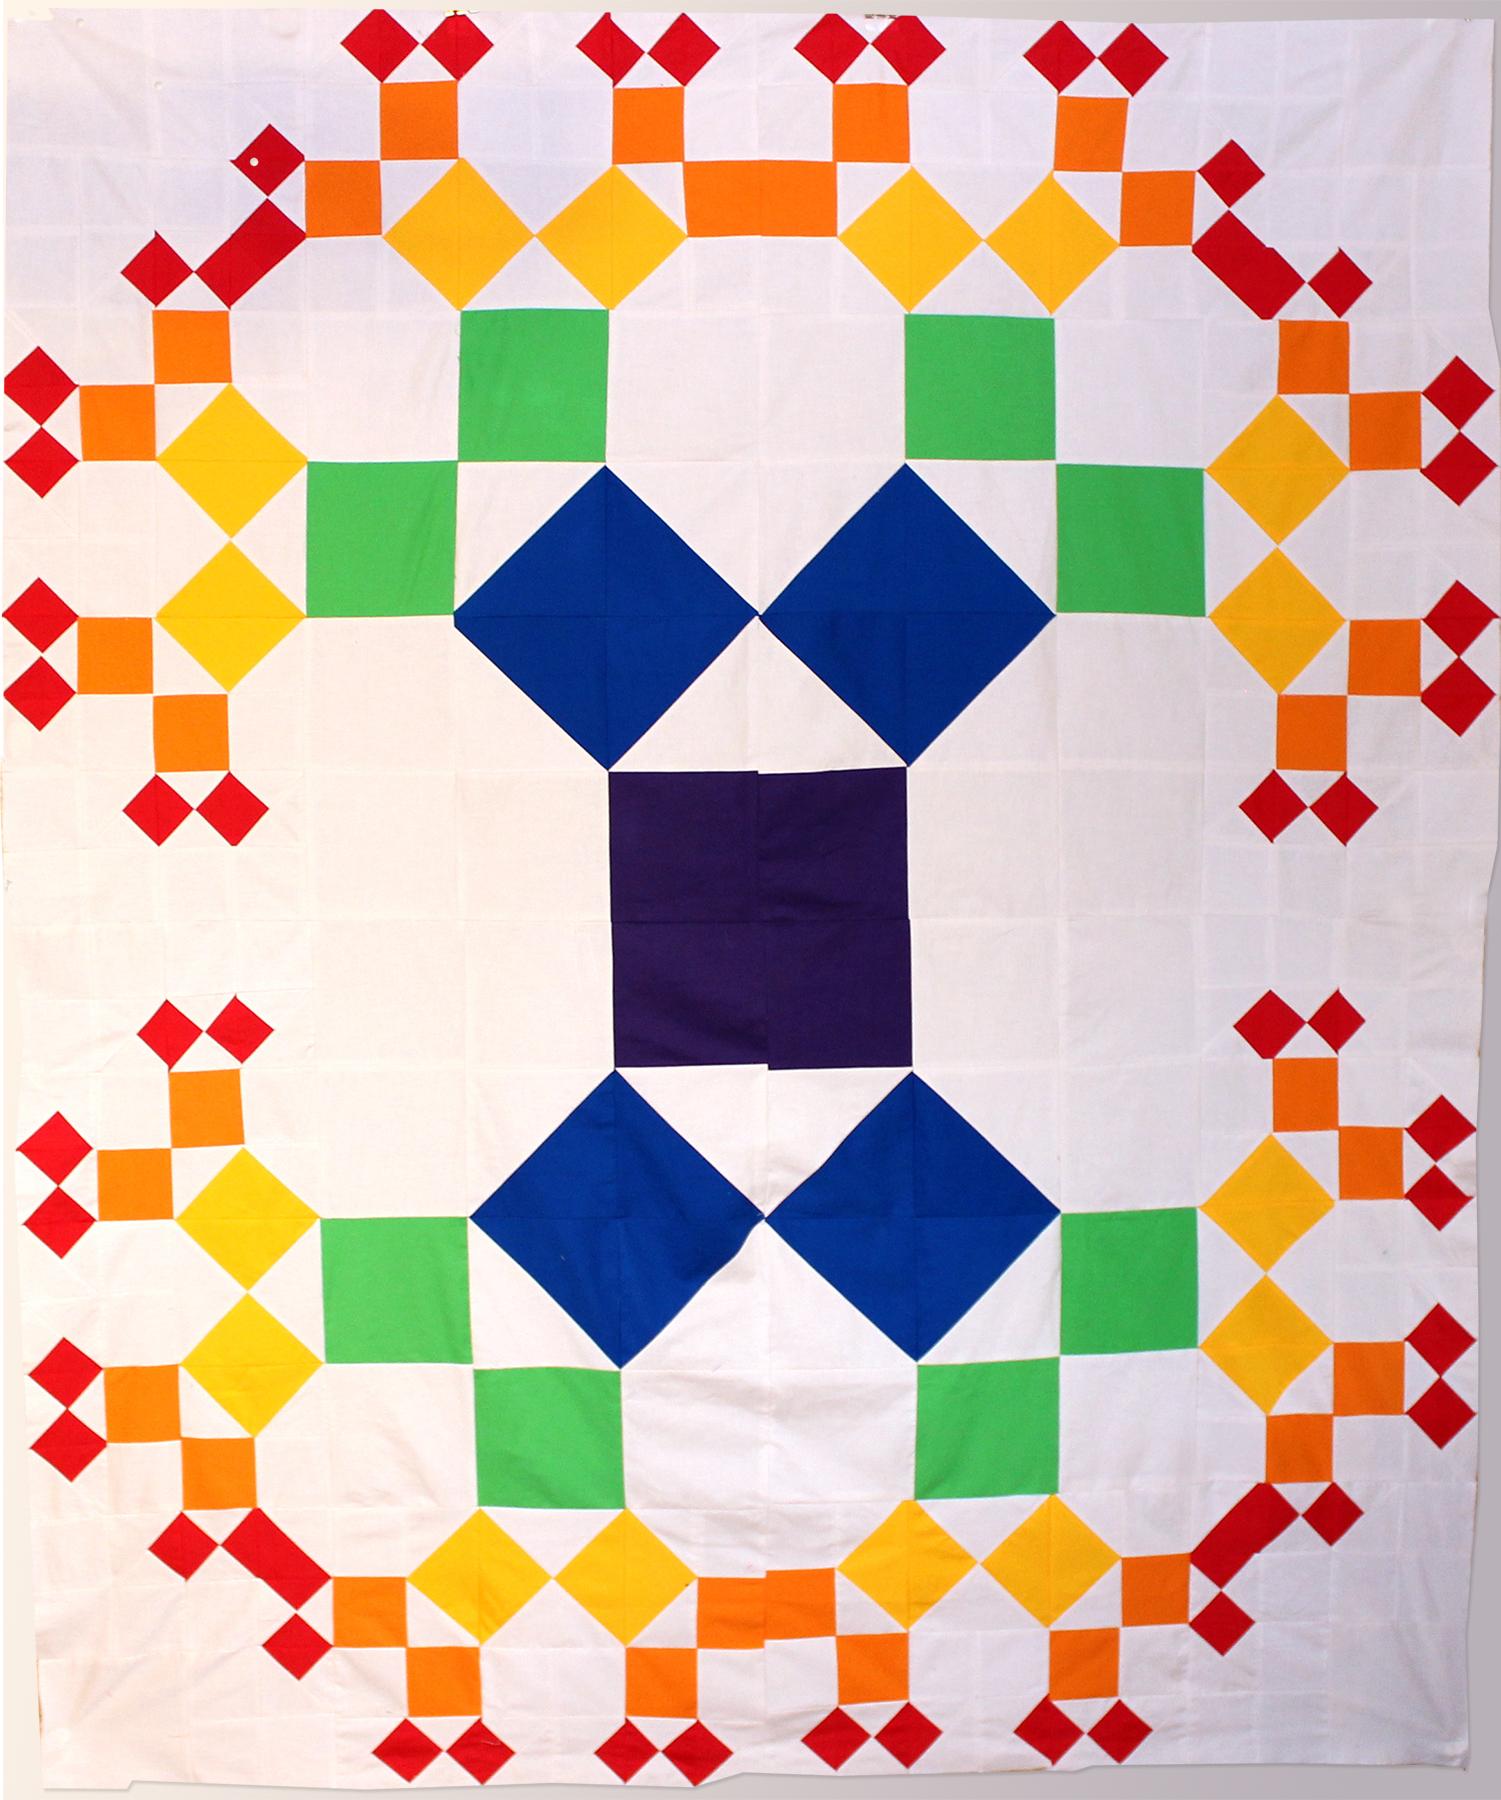 Image for entry 'Pythagoras' Rainbow Quilt'